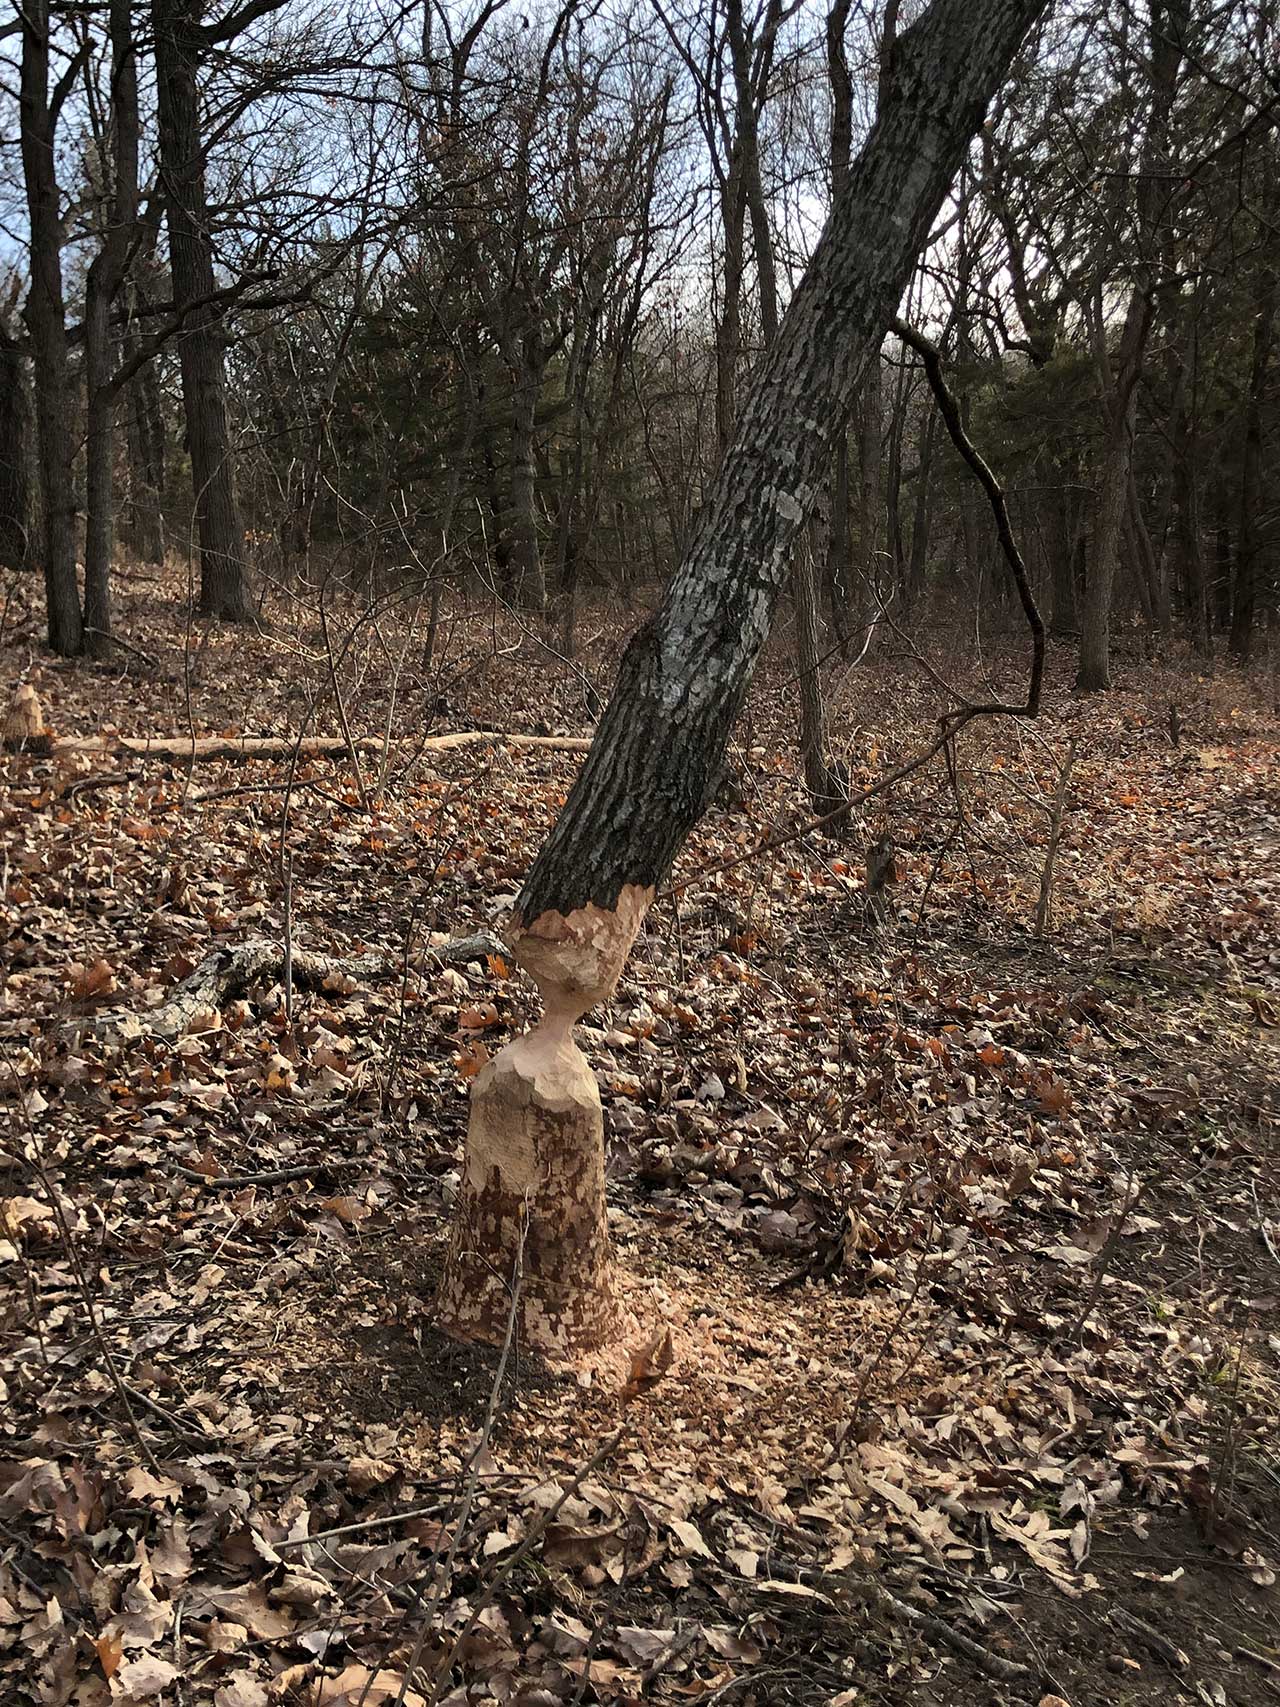 Beaver damage to a tree